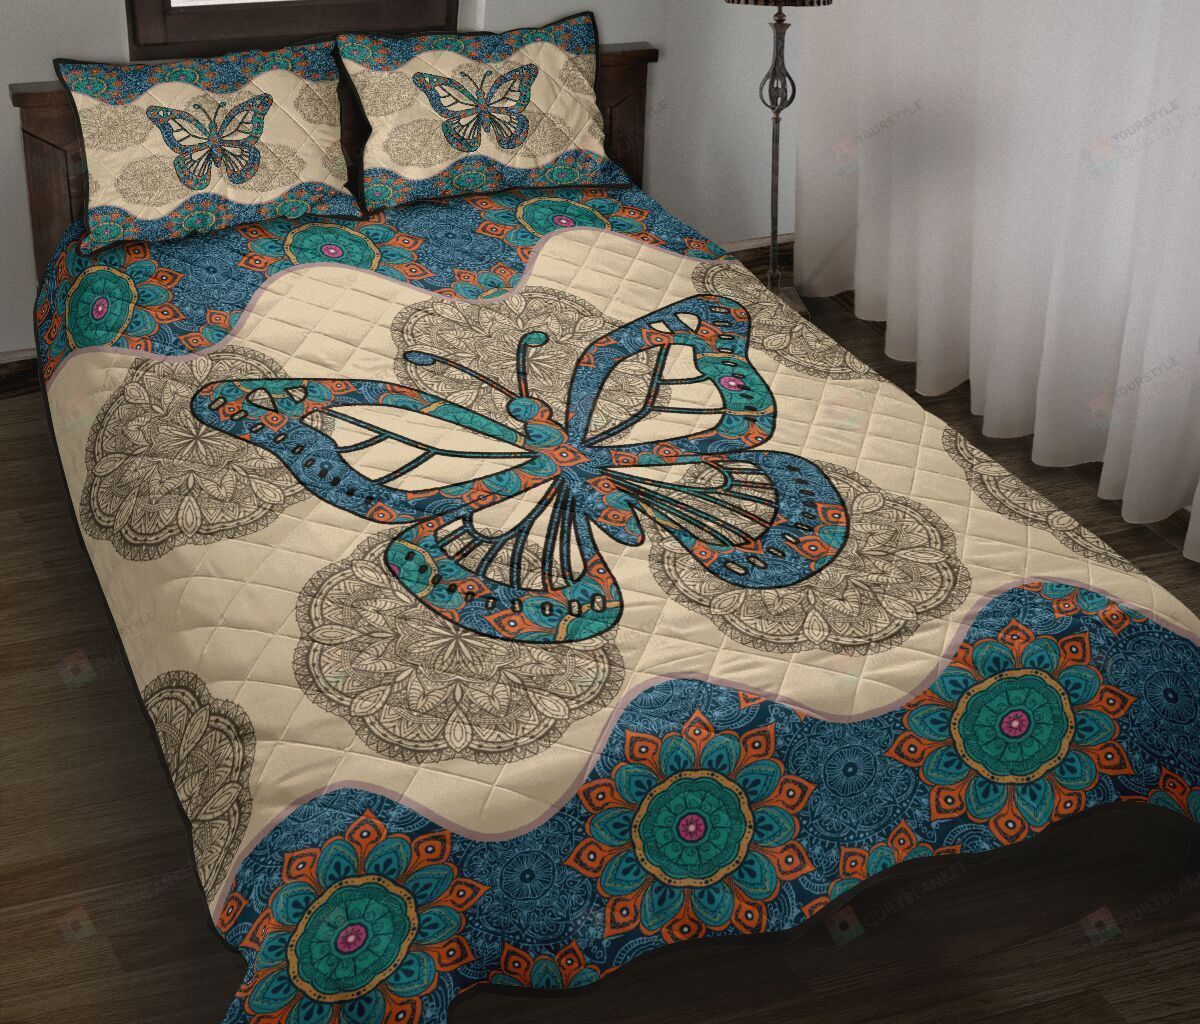 Butterfly Quilt Bedding Set